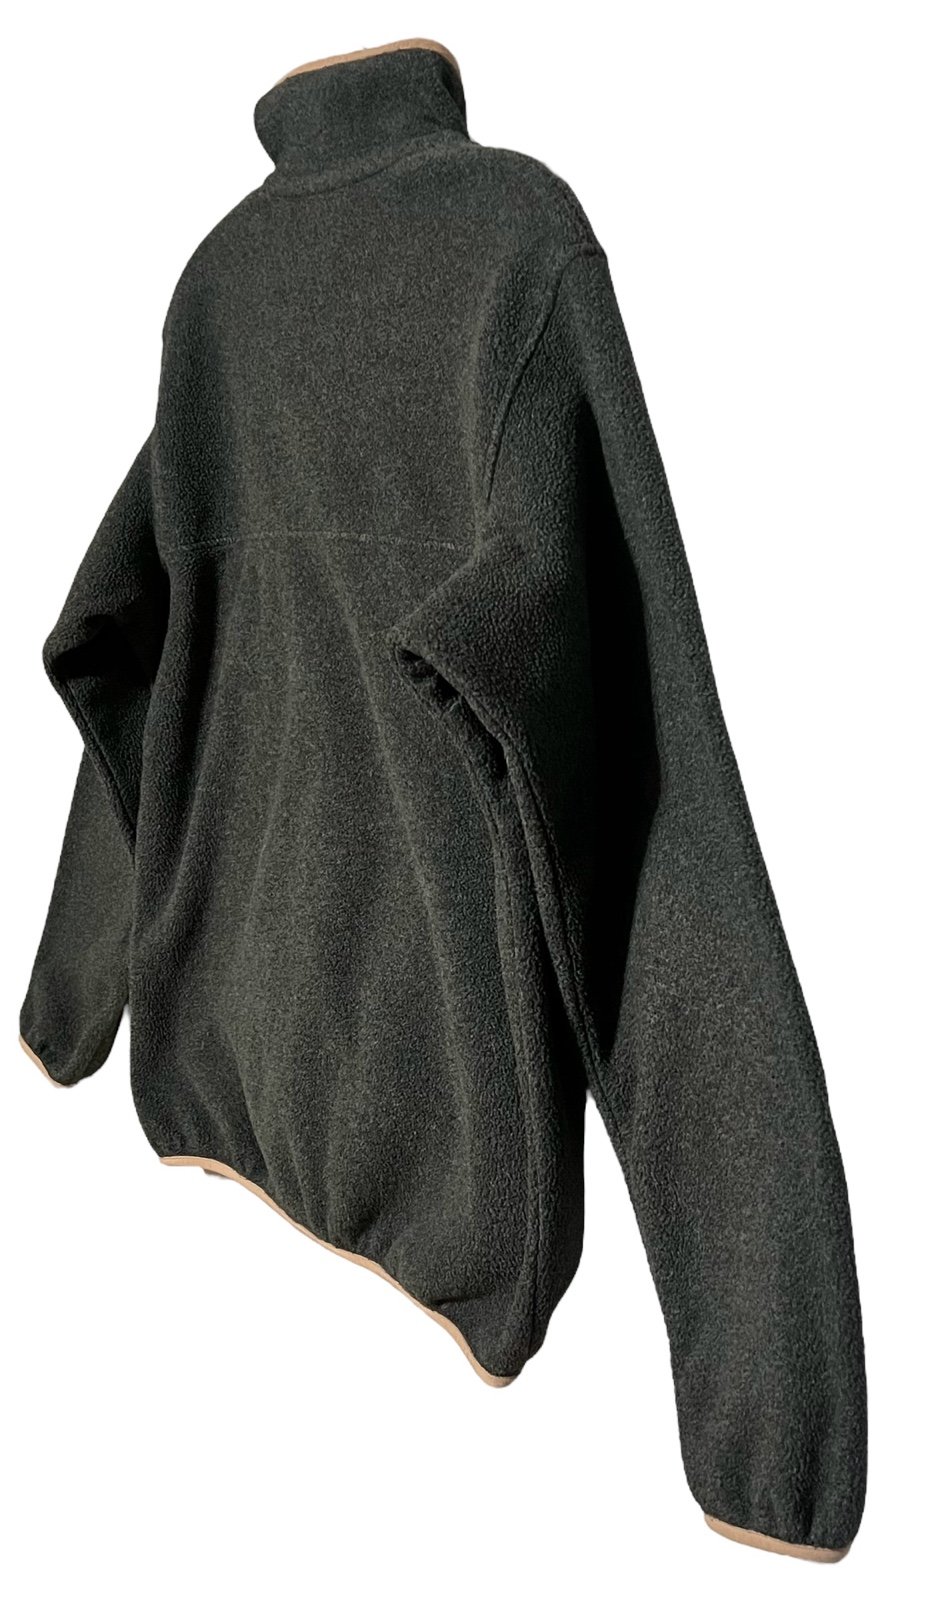 Perfect Patagonia Synchilla Women’s Medium Lightweight Fleece Snap-T Gray Pink Pullover ntXsYL5gu online store